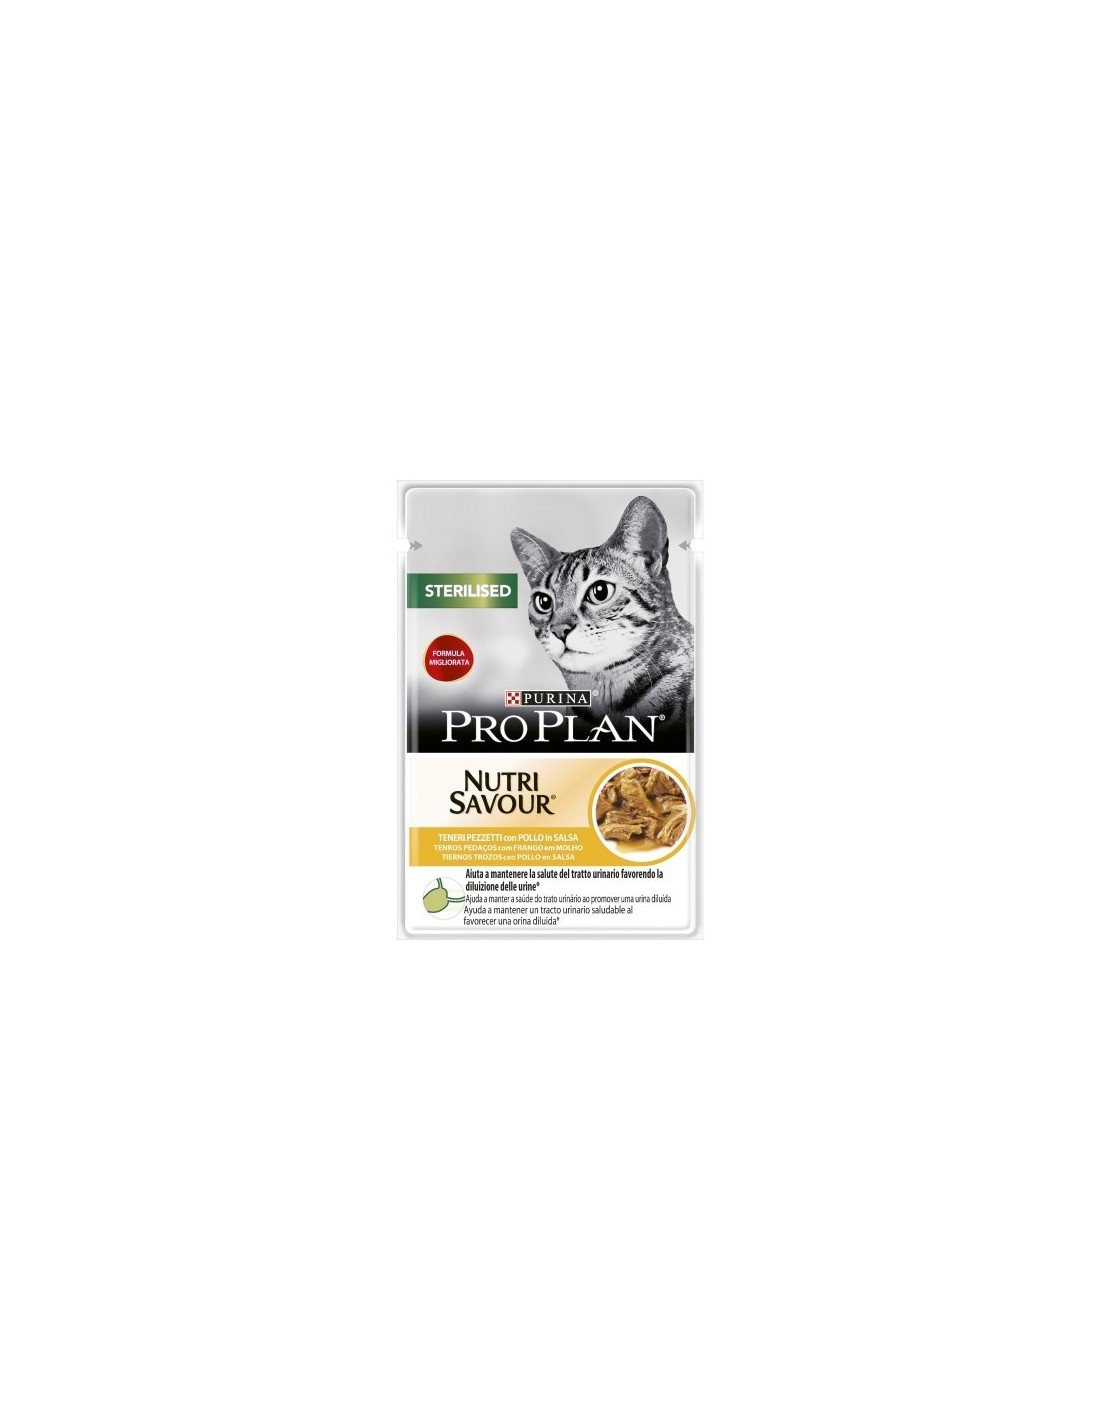 Nutri-savour-comida húmeda Pro plan para gatos Esterilizados, con salsa de  ternera, bolsa, 85g *